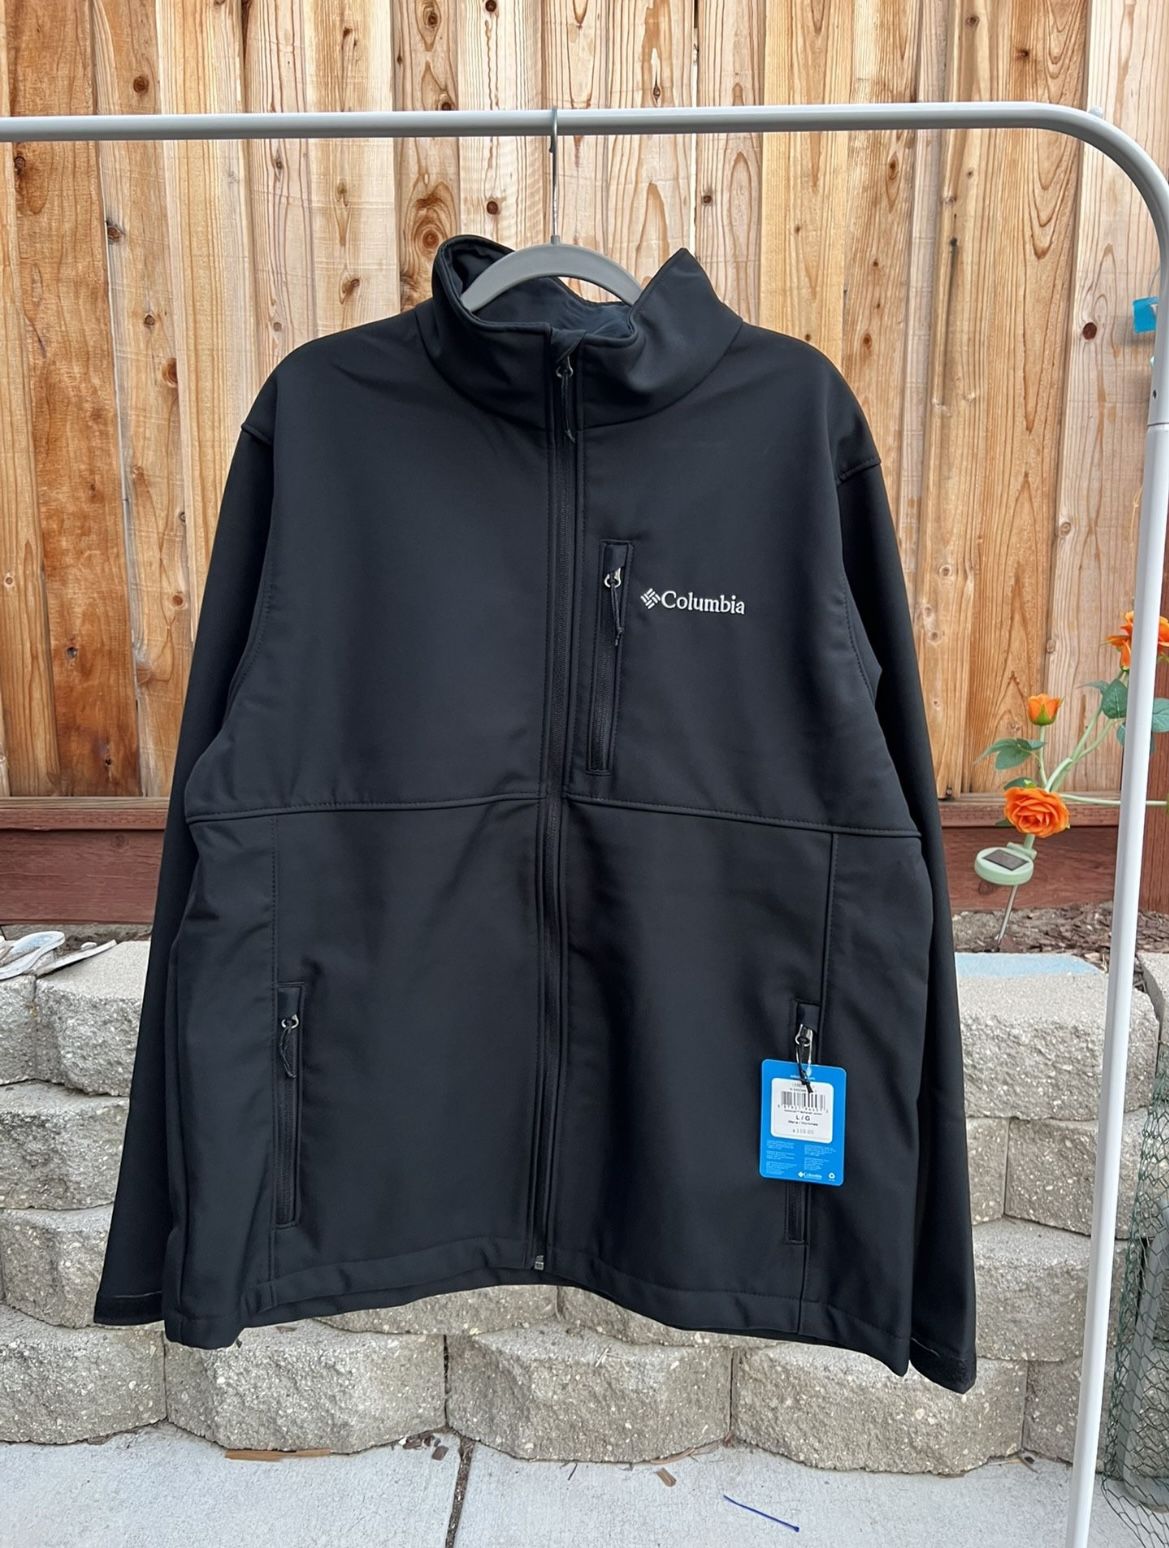  Columbia Zip Up Rain Jacket Size XXL Send Offers